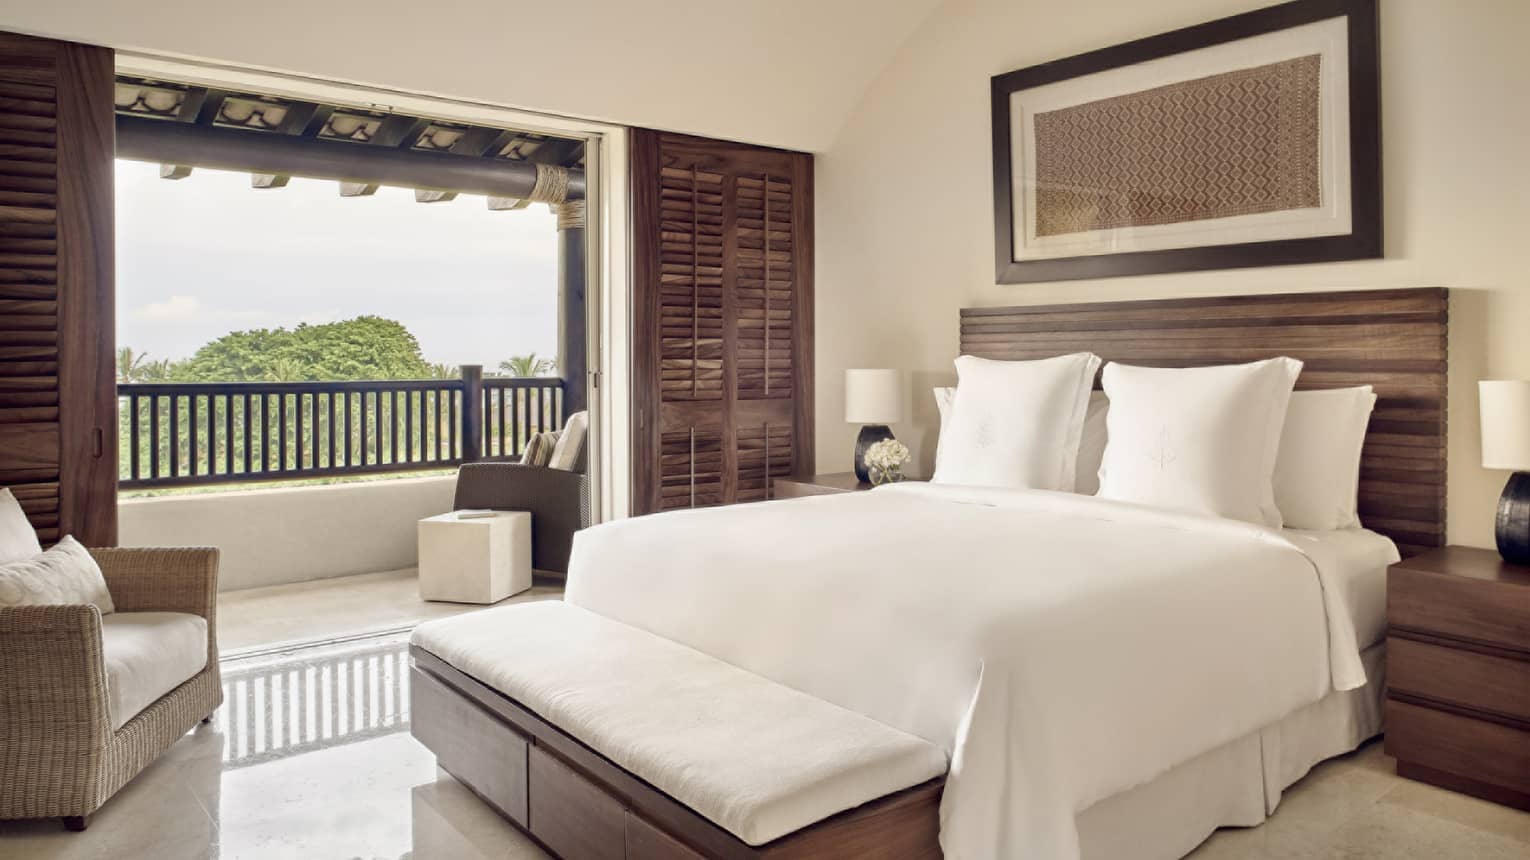 Bedroom with king bed, wooden headboard, balcony